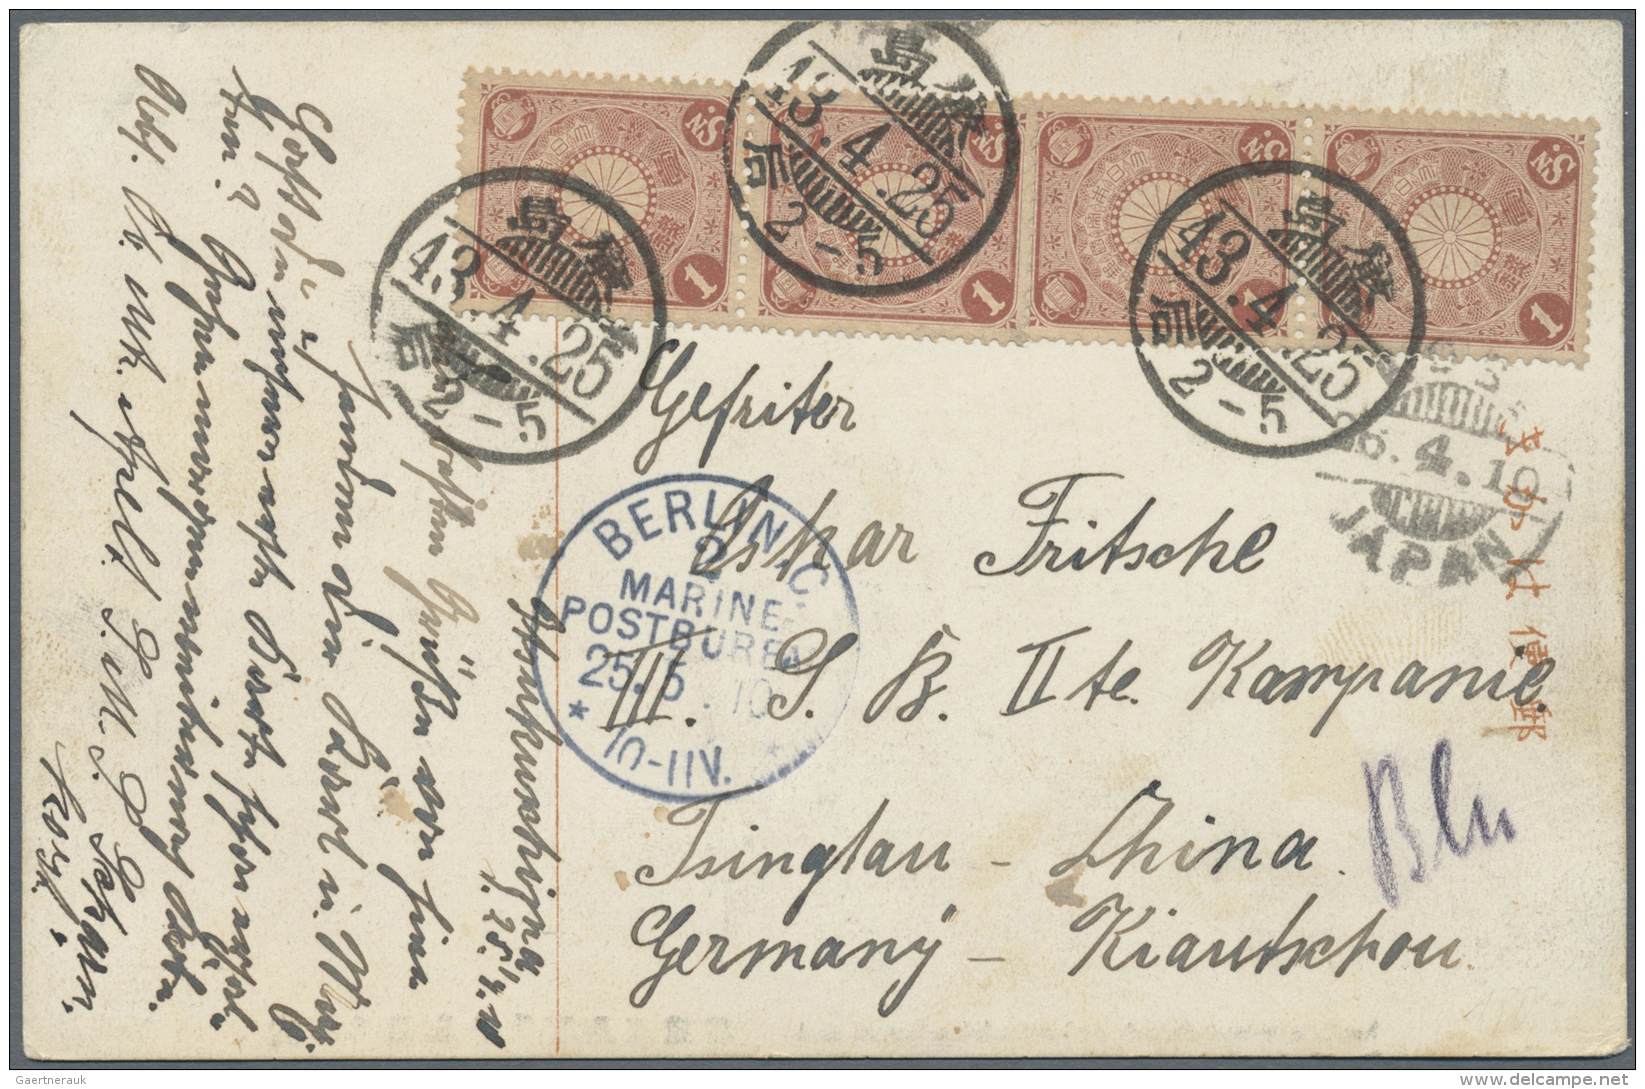 Deutsche Kolonien - Kiautschou - Besonderheiten: 1910, Ansichtskarte Aus Itsukushima Mit 2 Senkrechten Paaren 1 Sen Chry - Kiaochow